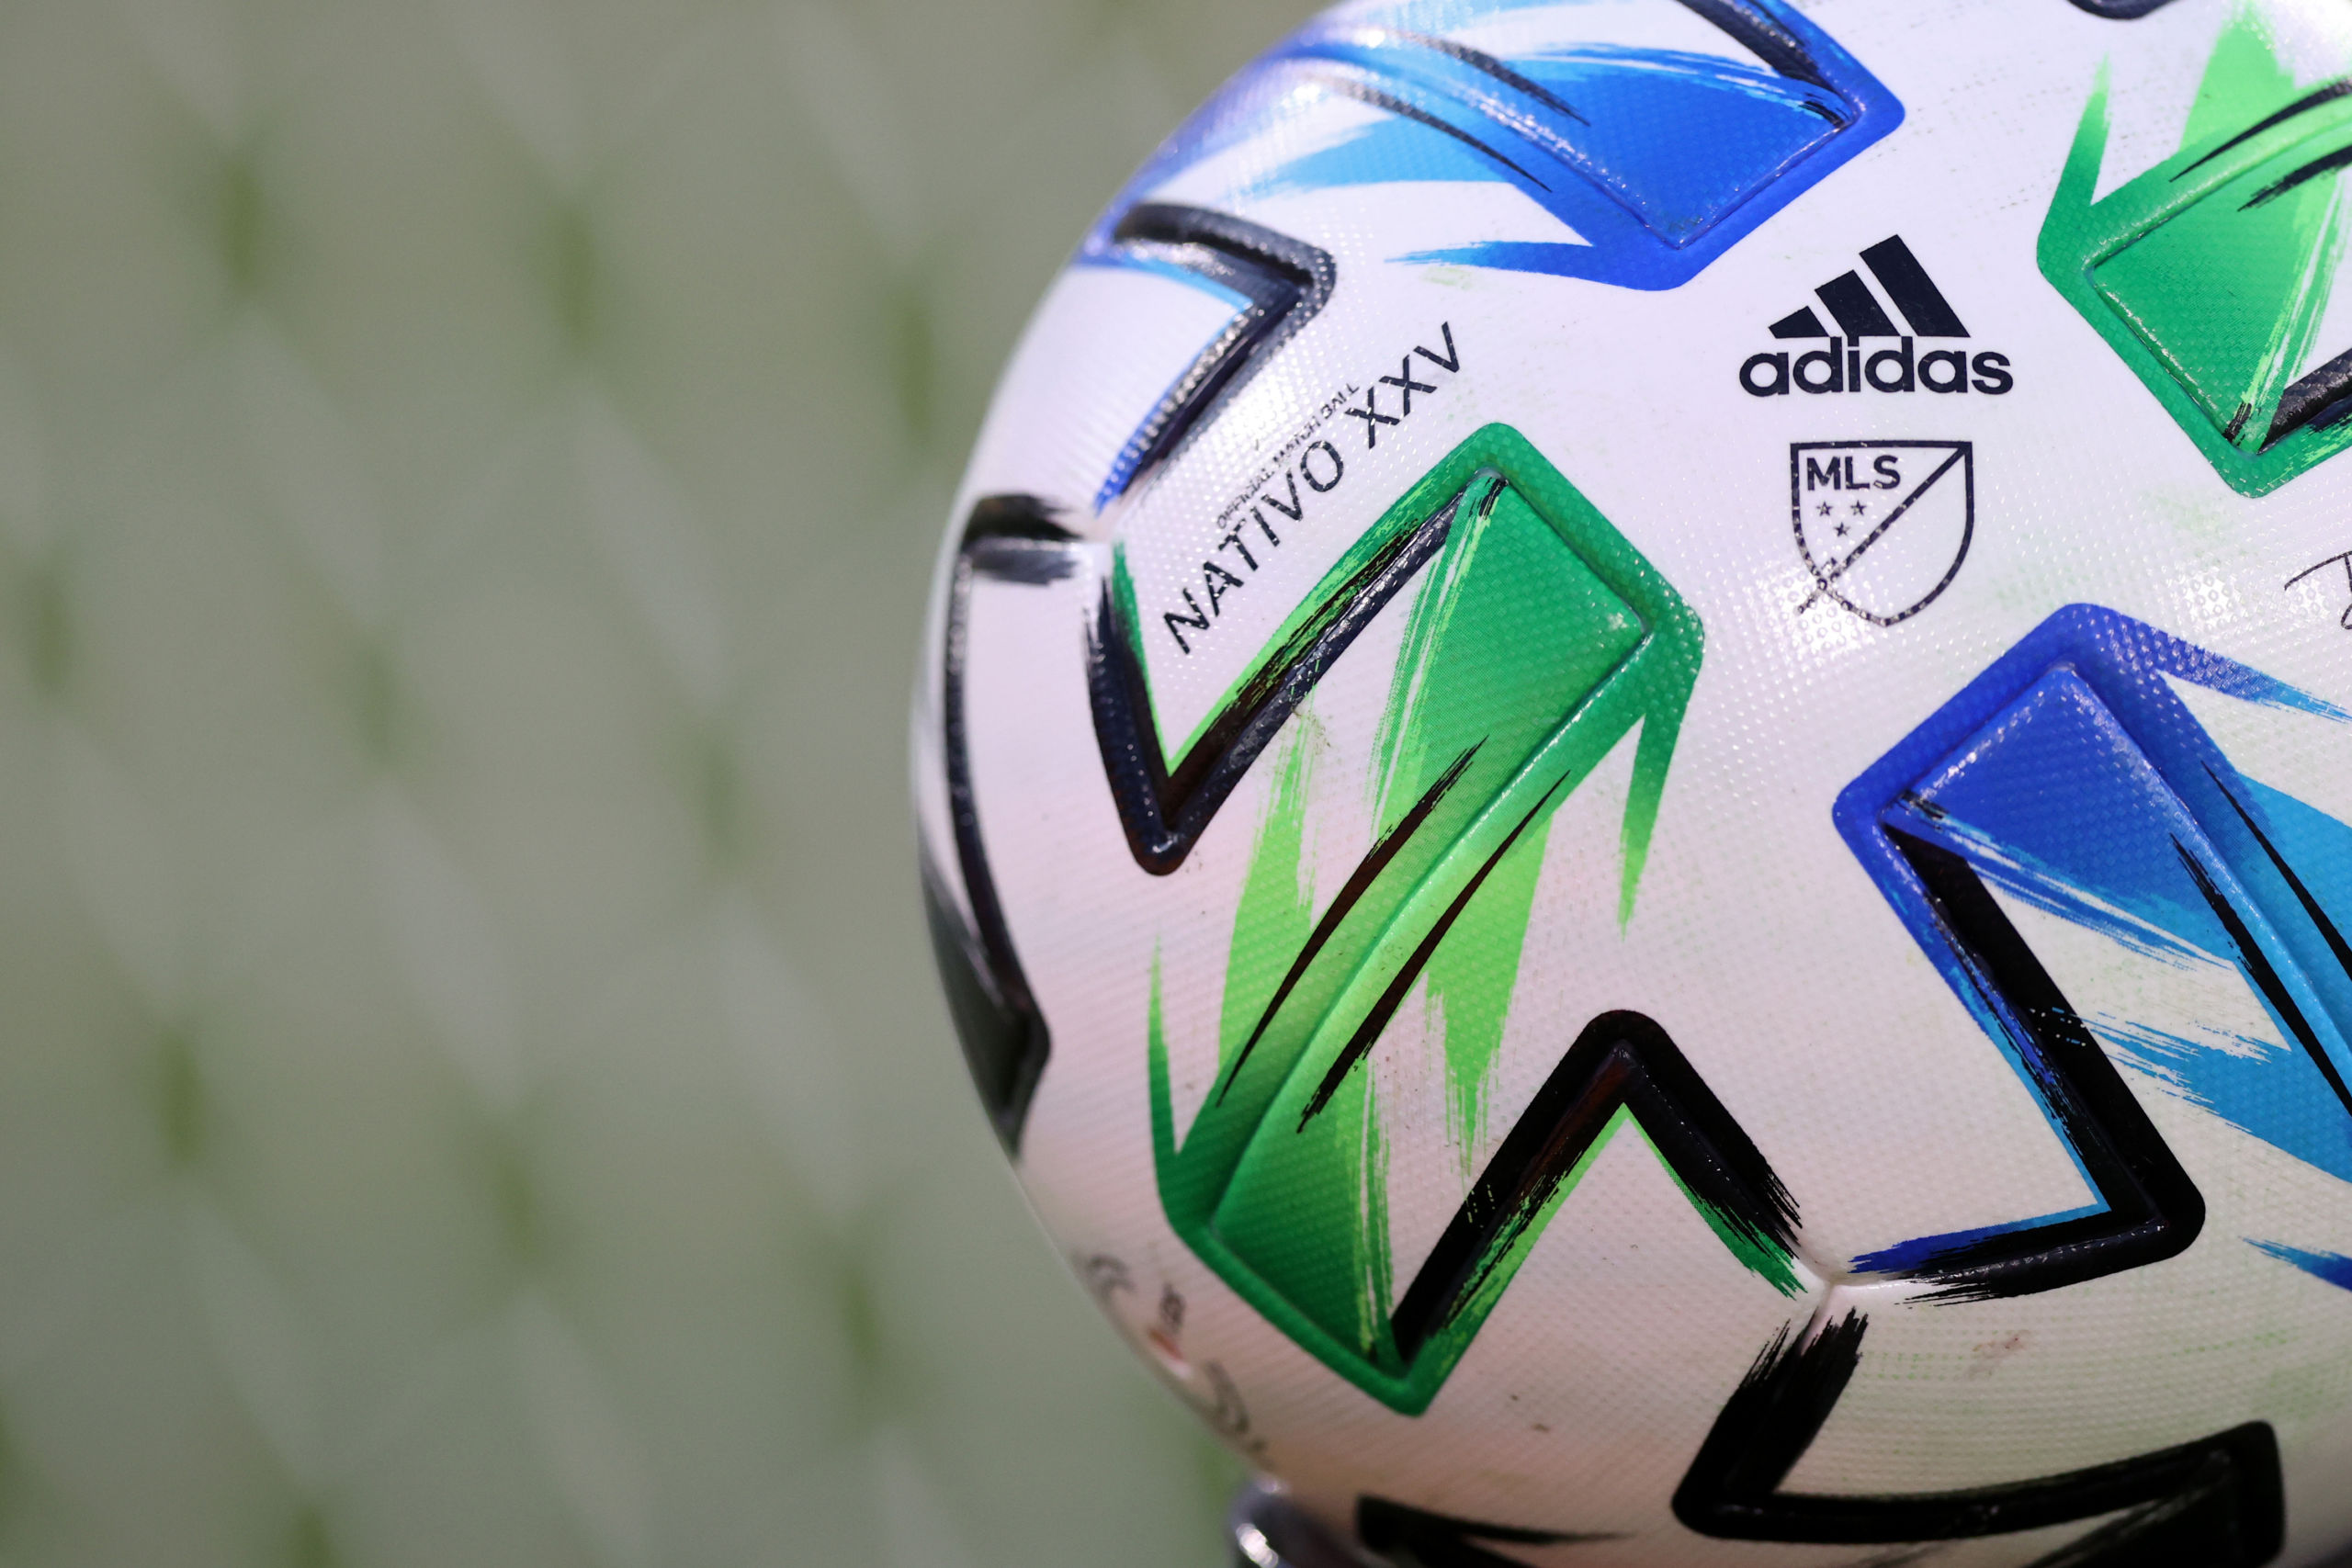 mls_logo_on_adidas_soccer_ball